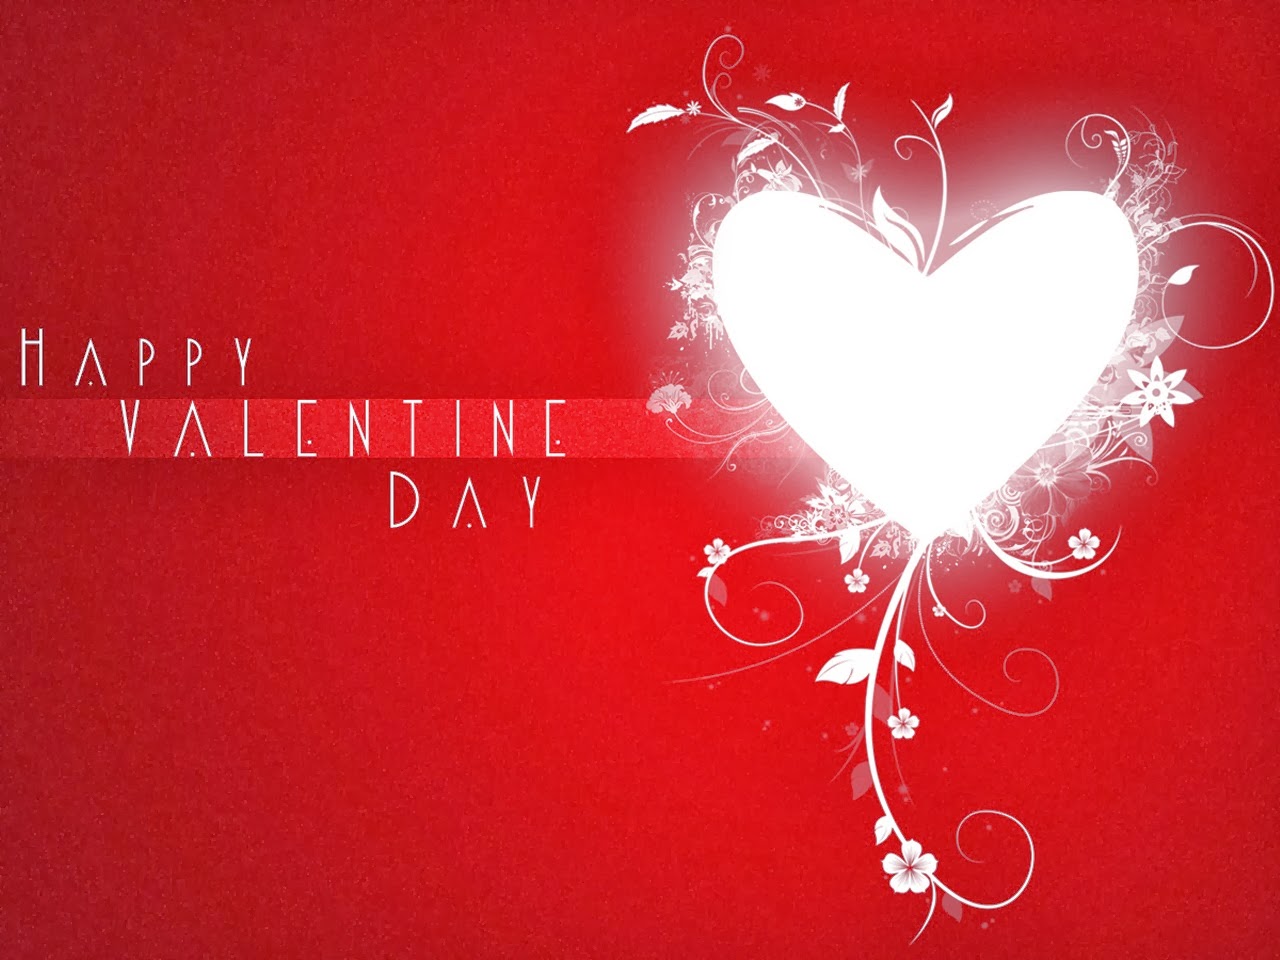 happy valentine day wallpaper hd,heart,love,valentine's day,red,text